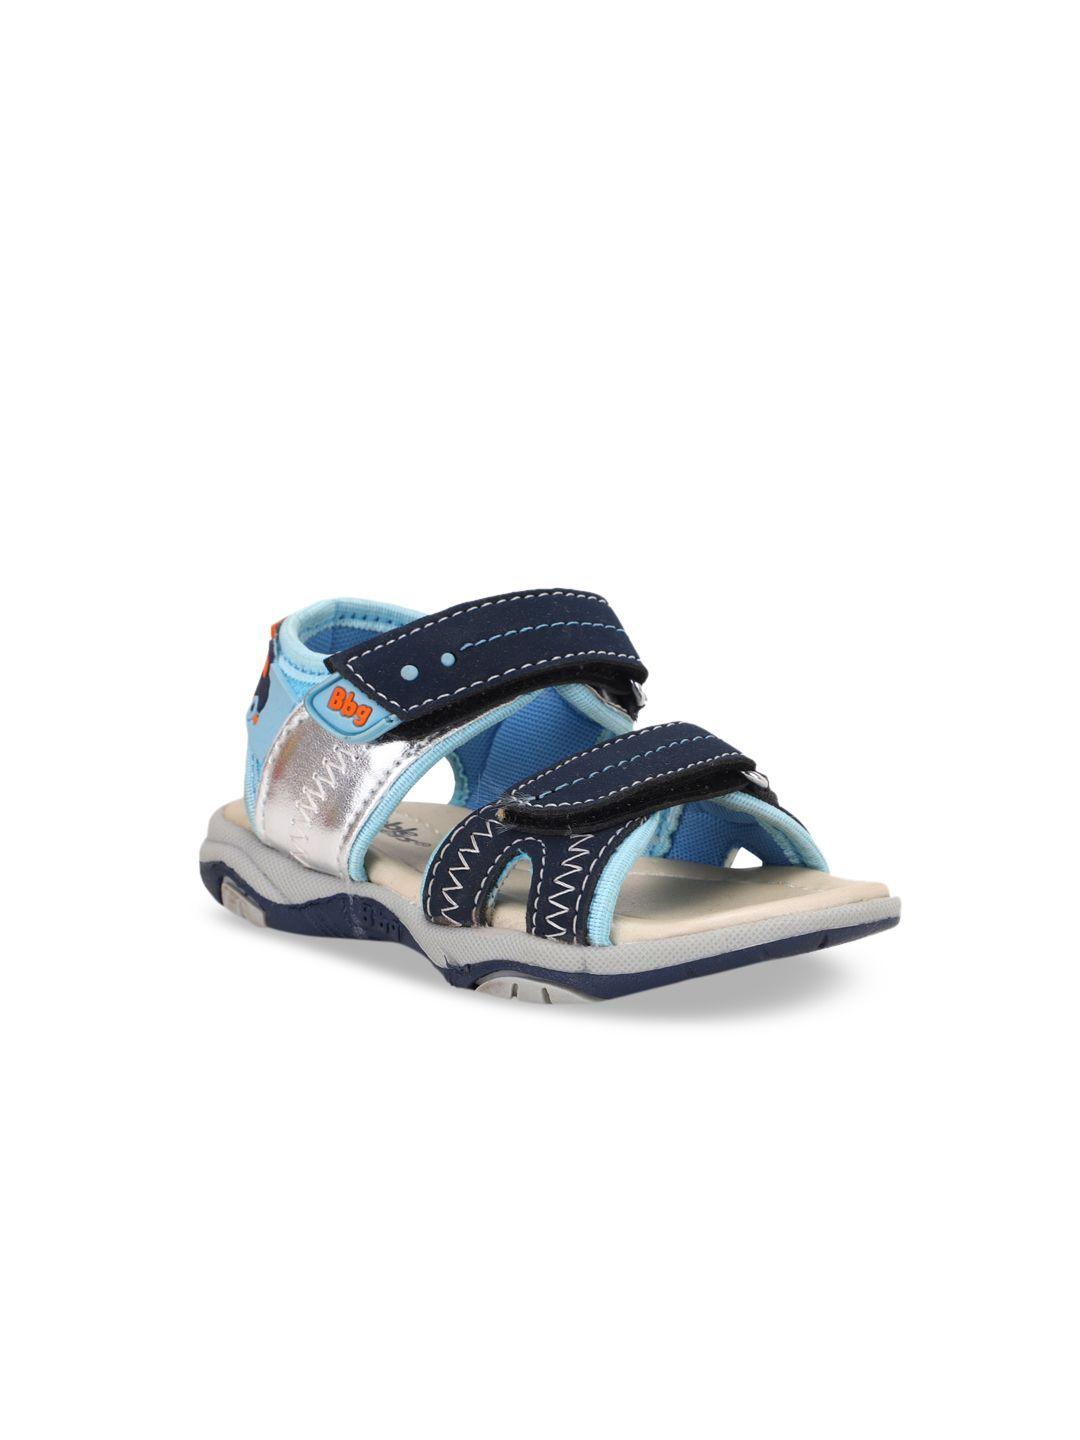 bubblegummers-boys-navy-blue-&-silver-toned-sports-sandals